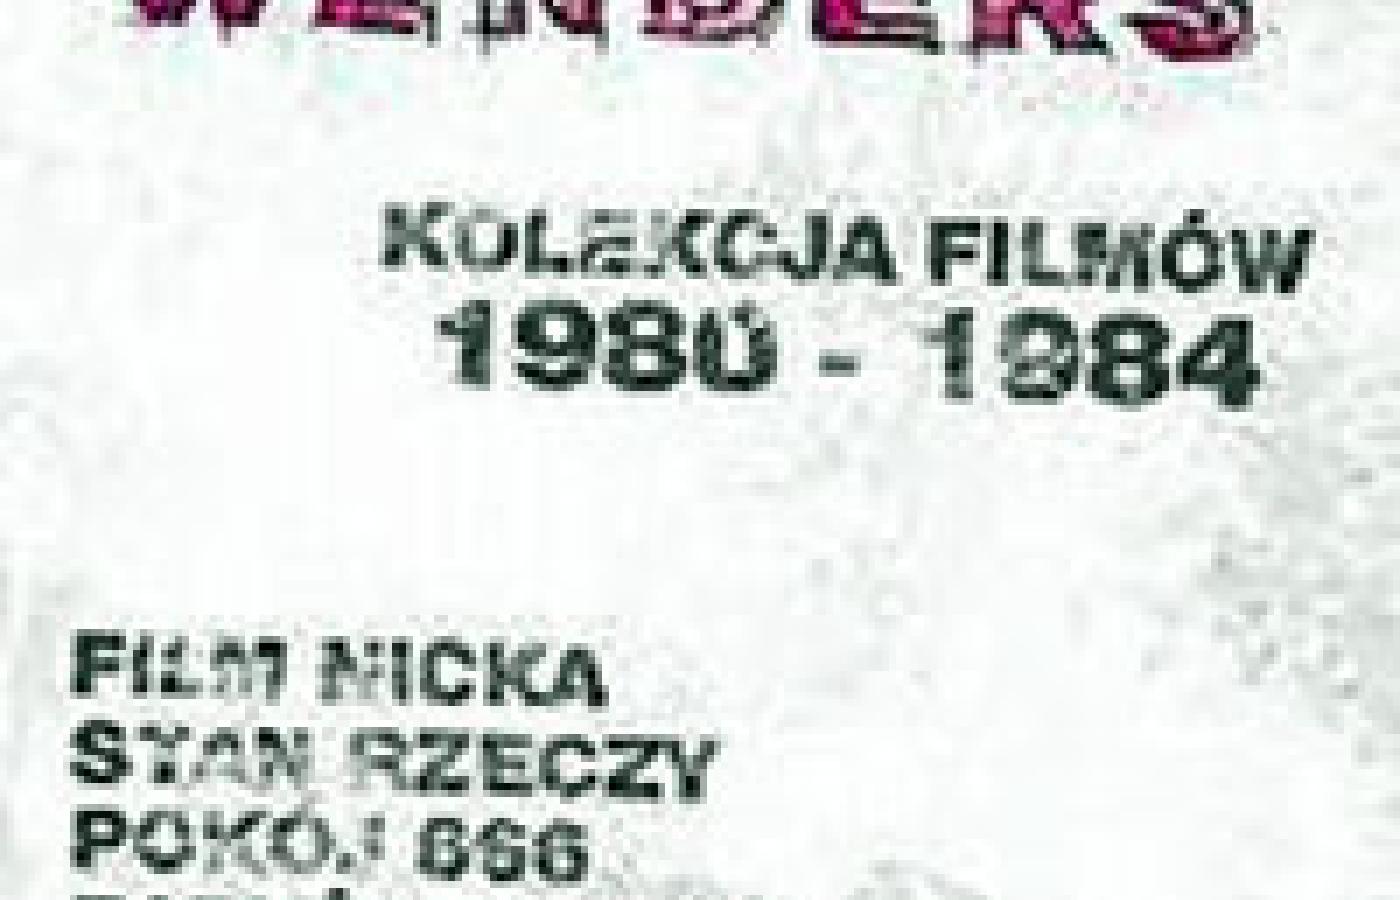 Kolekcja filmów Wima Wendersa, dystr. Monolith